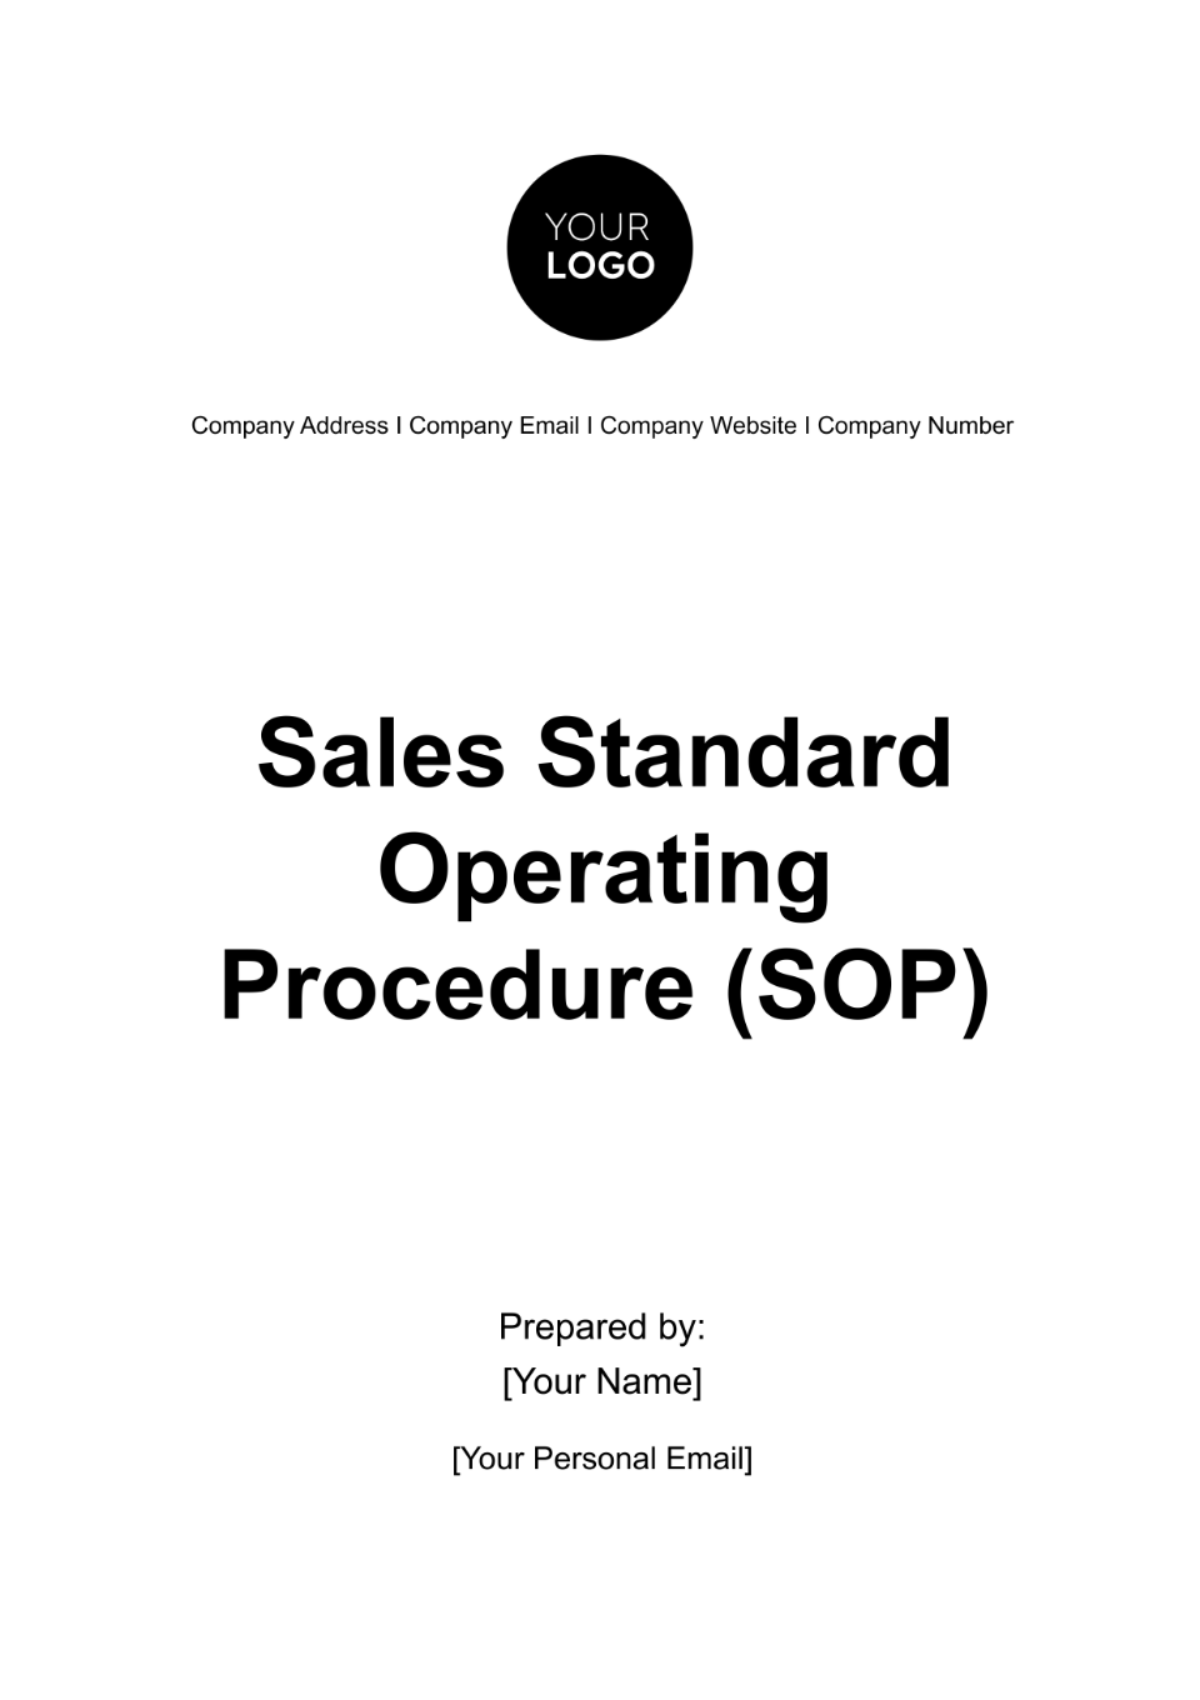 Sales Standard Operating Procedure (SOP) Template